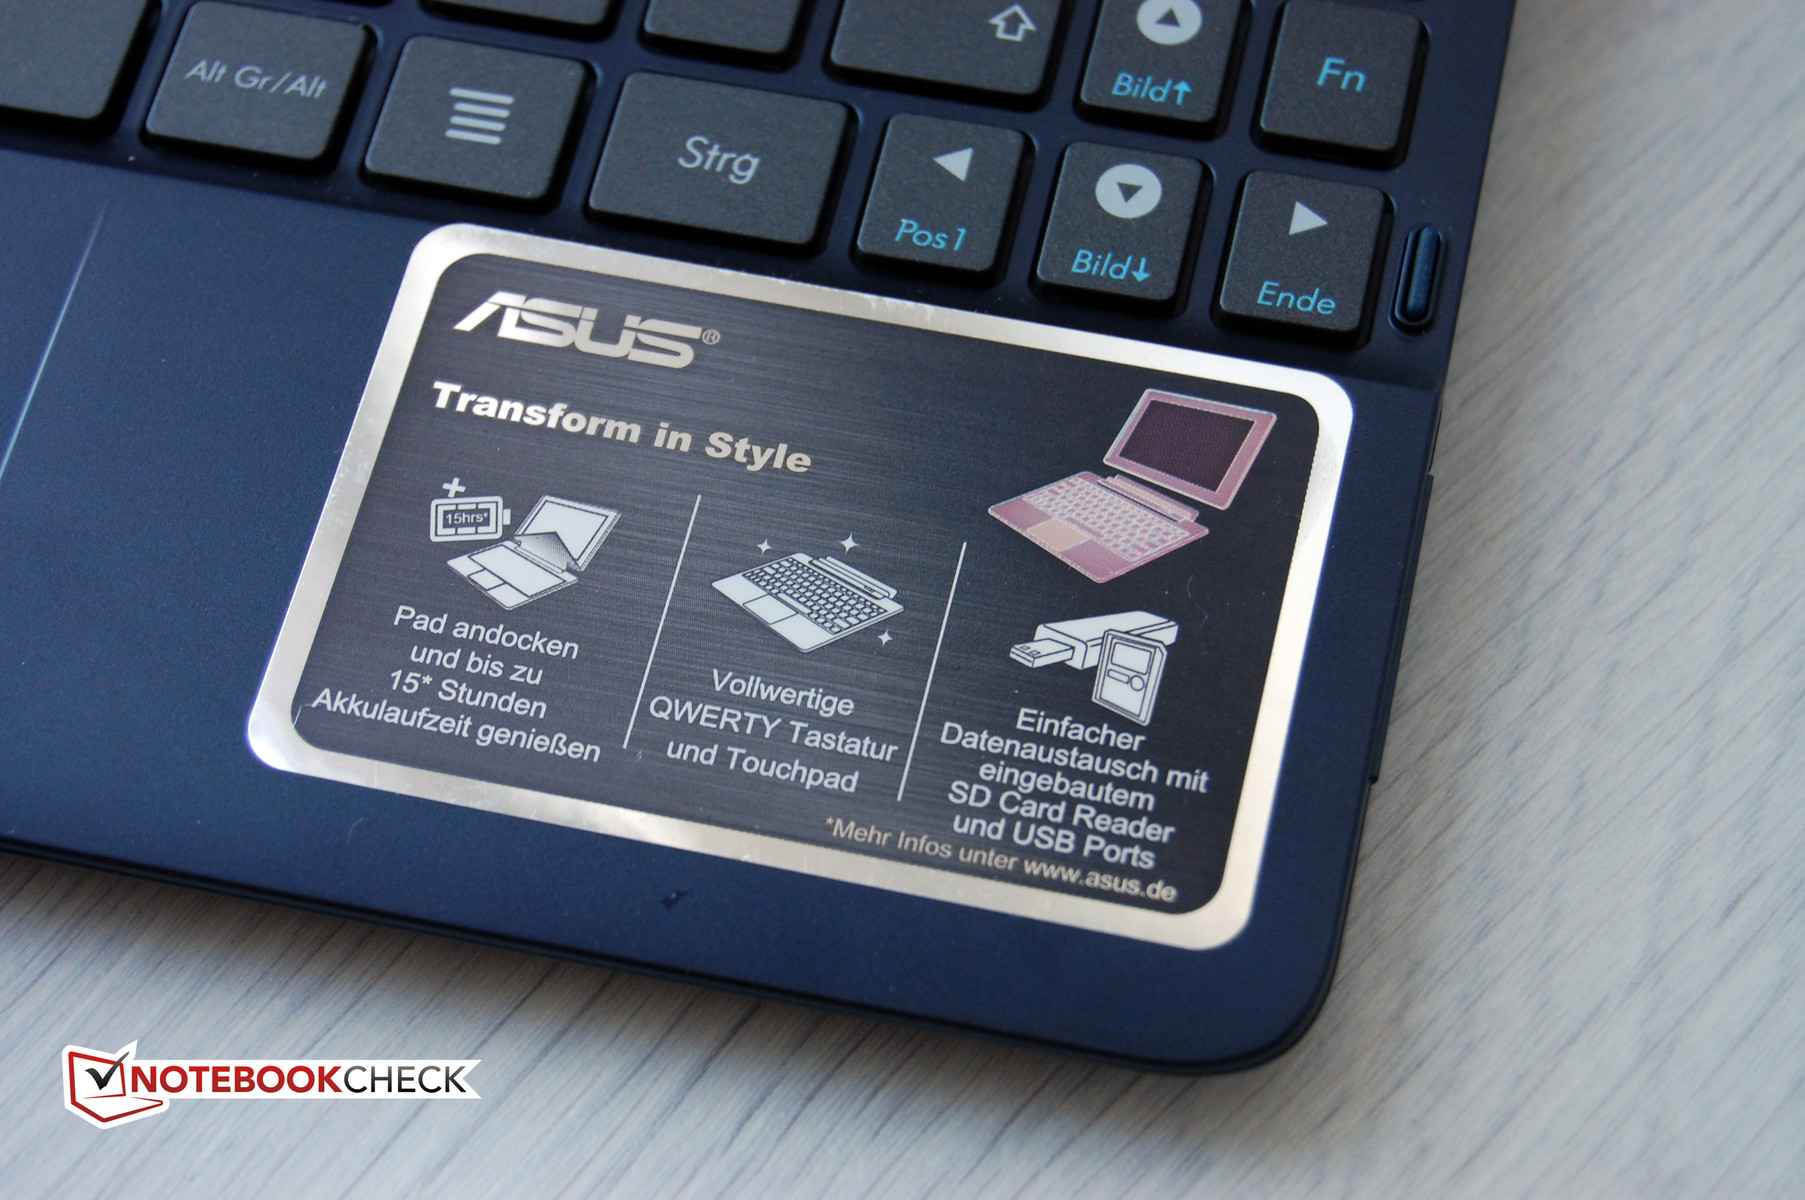 Review Asus Transformer Pad Tf300t Tablet Mid Reviews